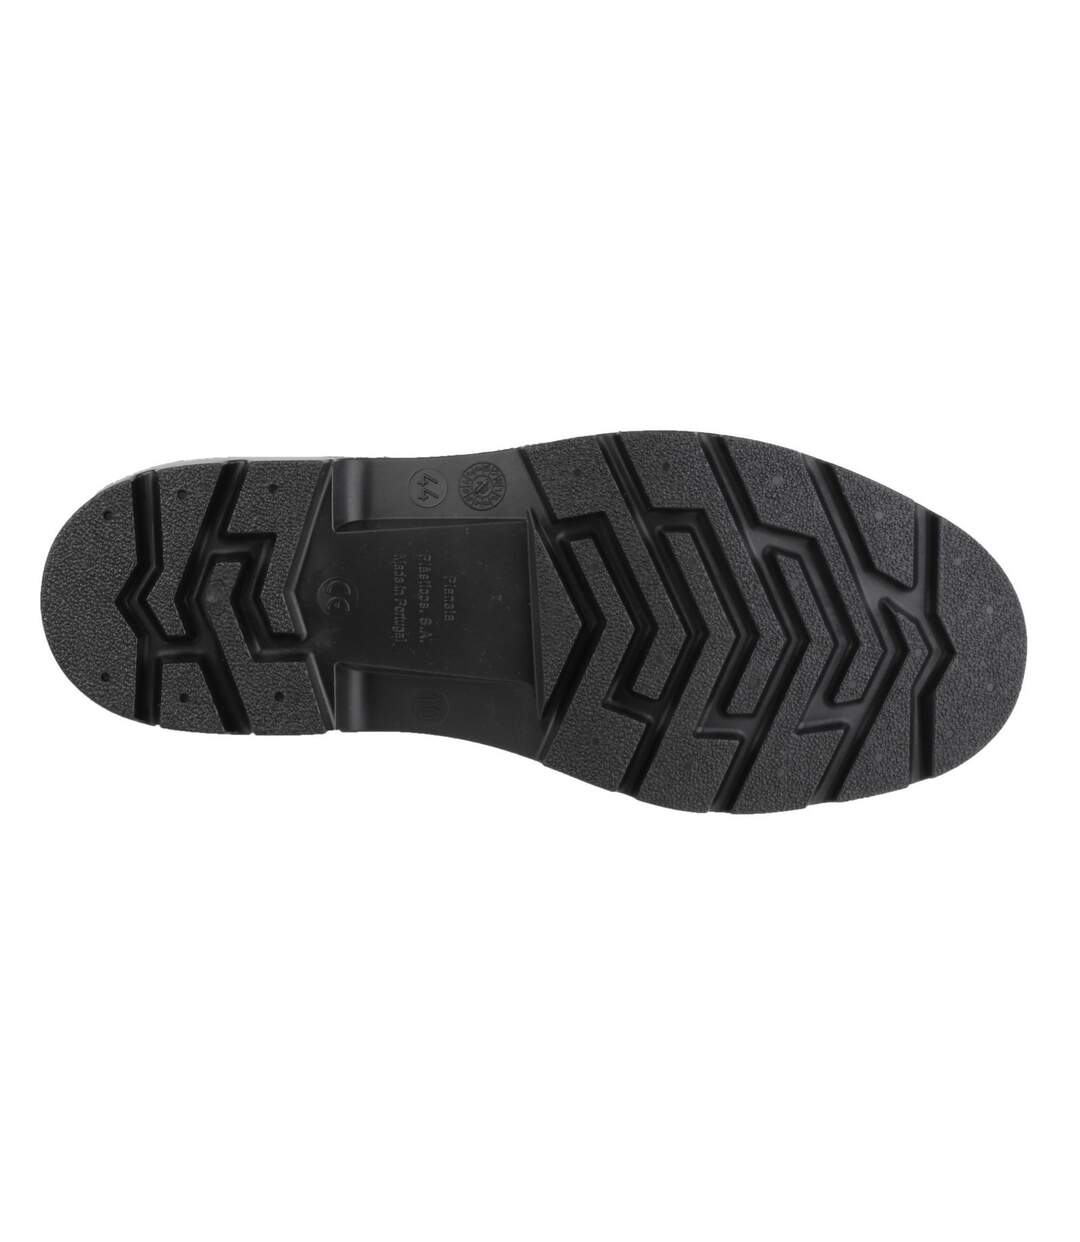 Dunlop - Bottes imperméables - Hommes (Noir) - UTFS2683